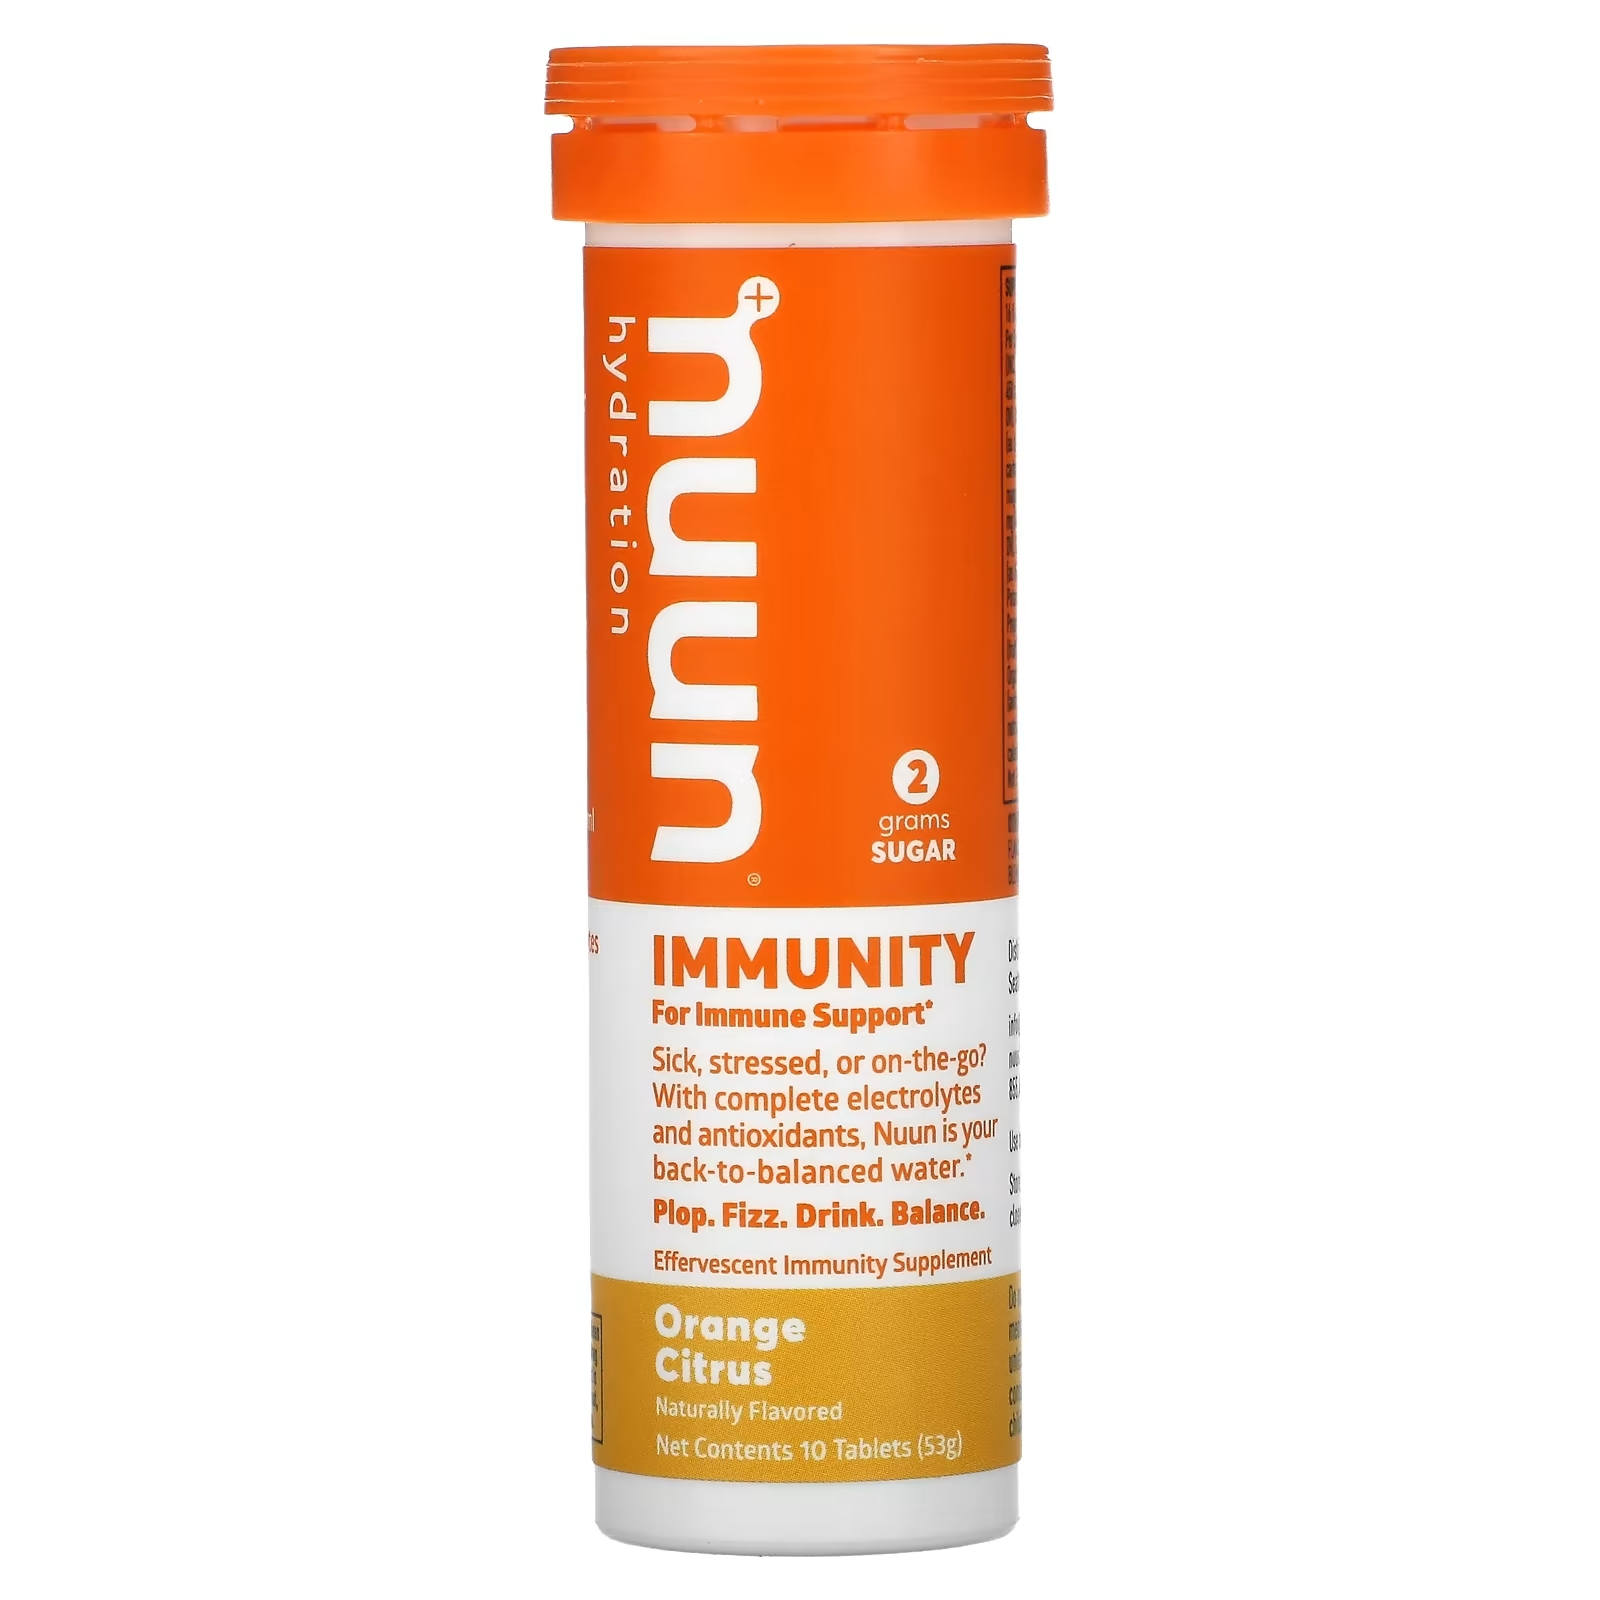 Nuun Hydration Immunity Шипучая добавка для иммунитета апельсин и цитрус, 10 таблеток nuun hydration витамины и кофеин шипучая витаминная добавка имбирный лимонад 12 таблеток